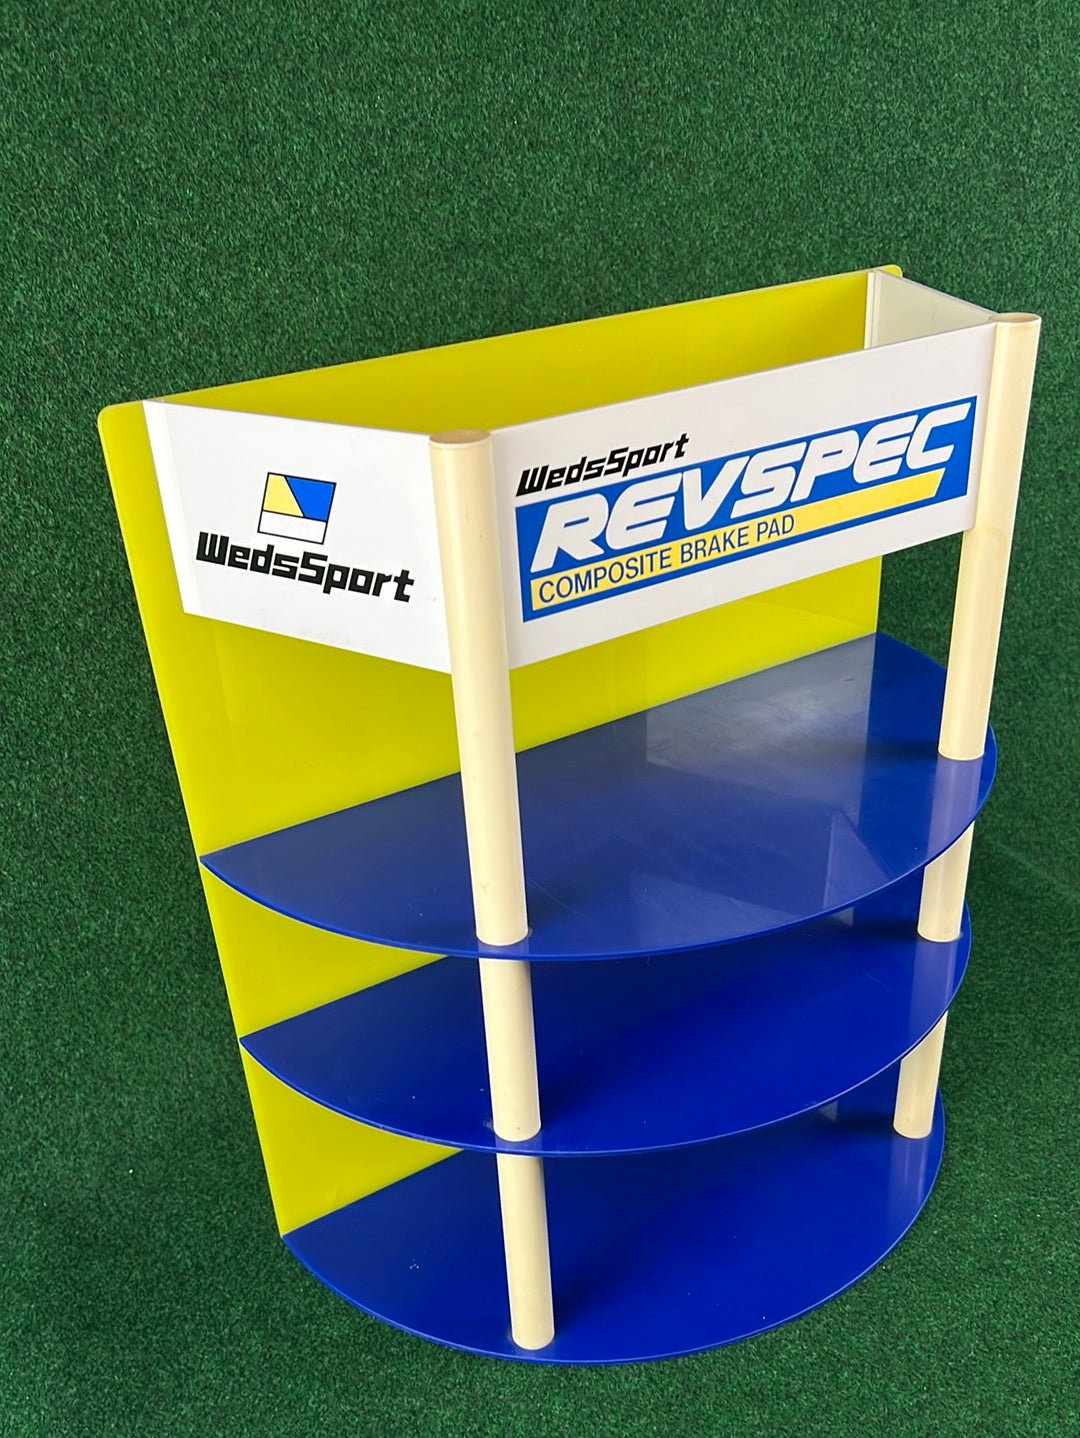 WedsSport - Revspec Japanese Storefront Retail Display Stand Shelf